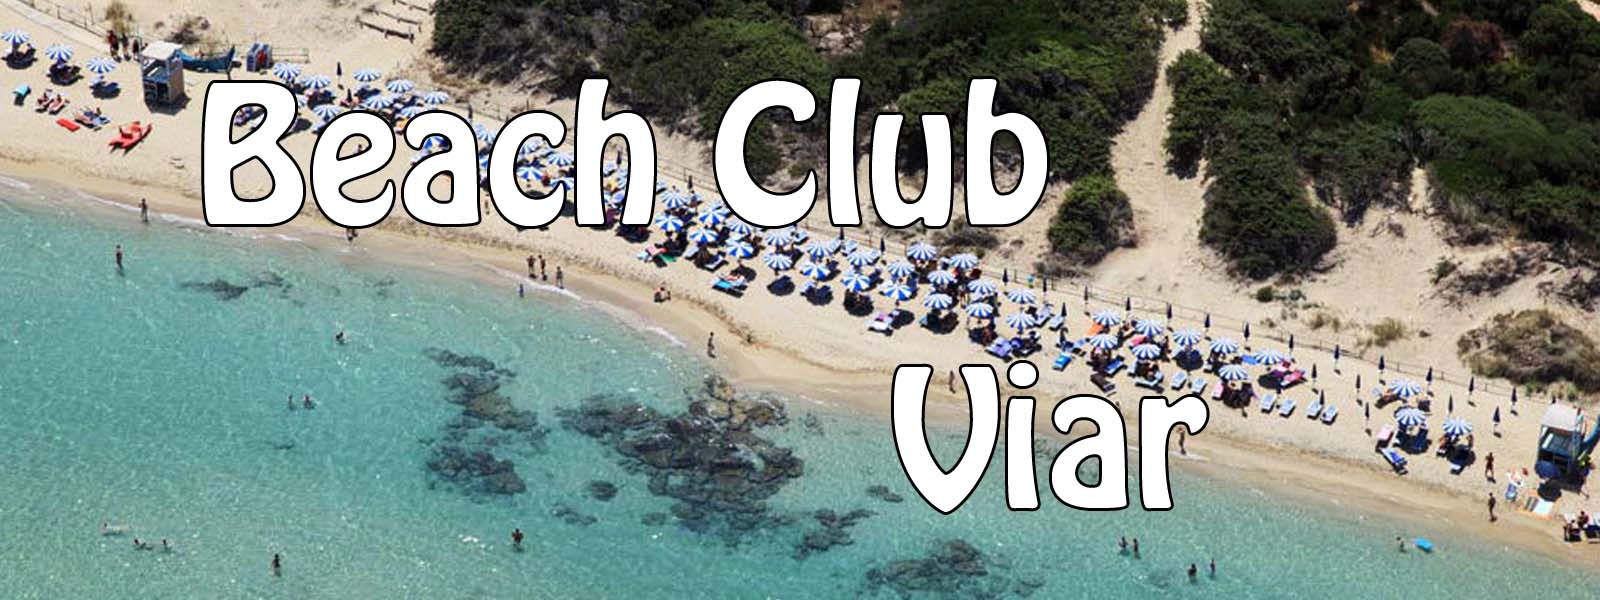 Viar Beach Club